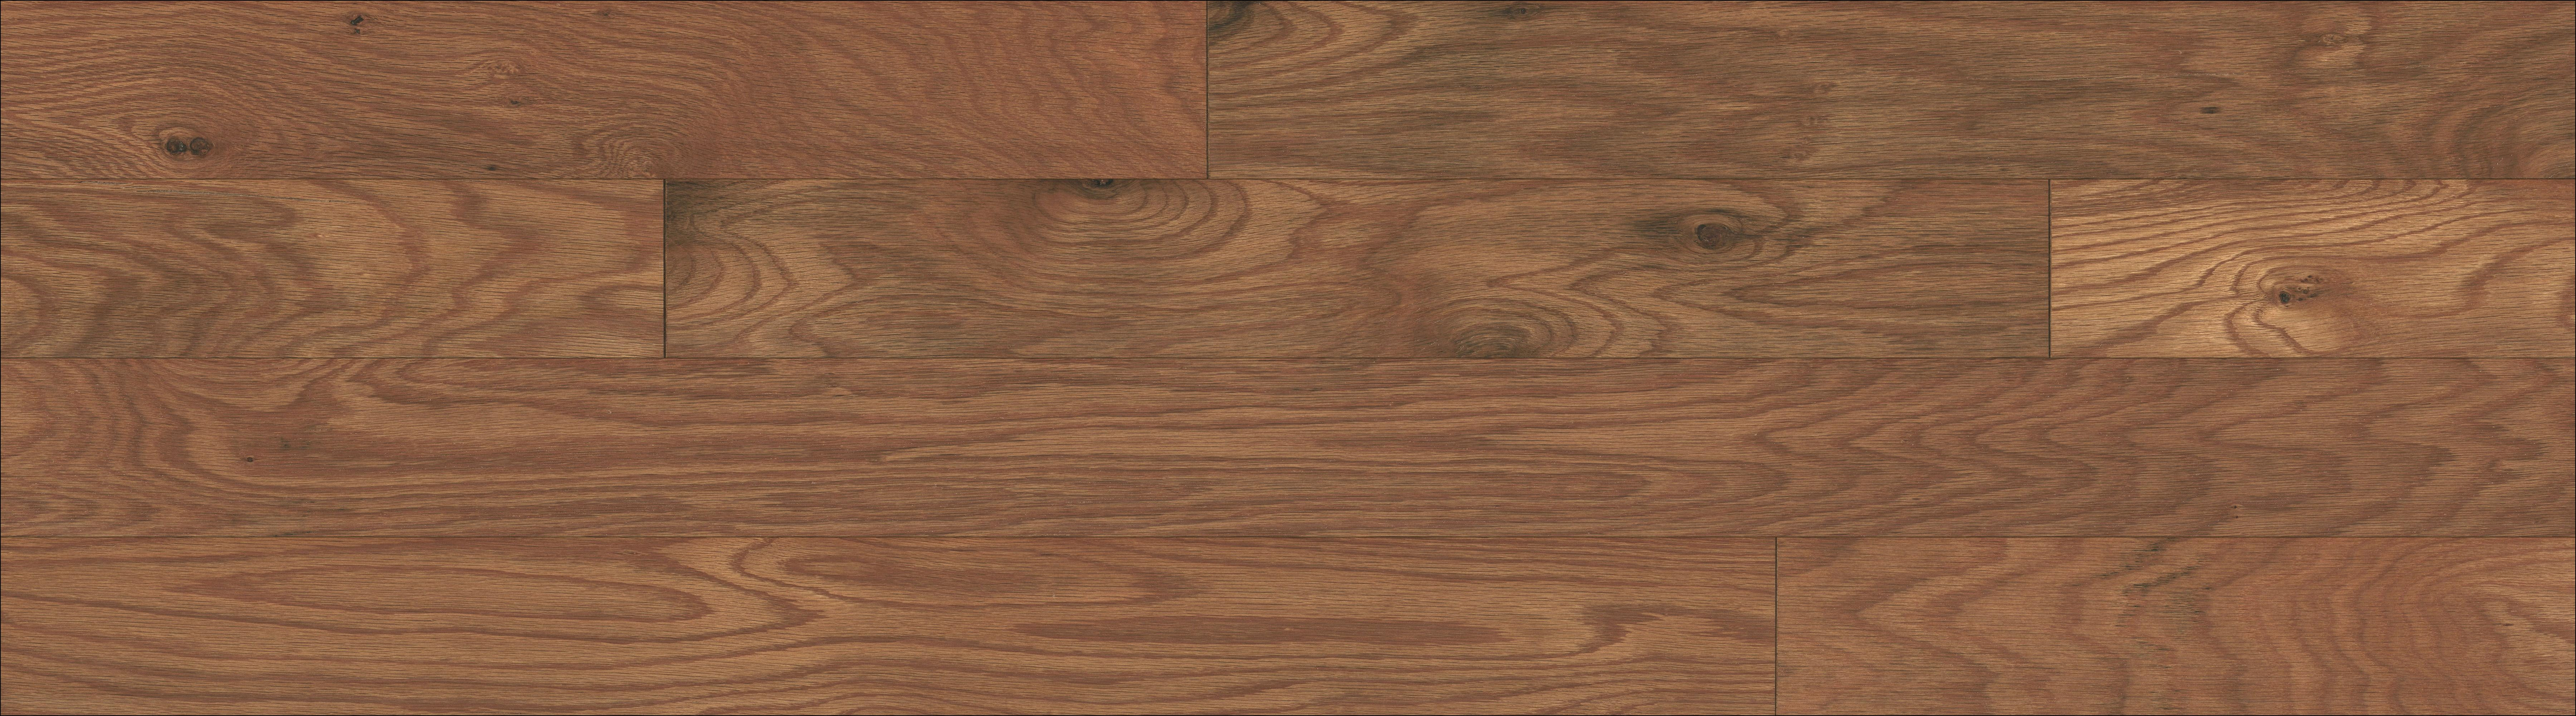 Cheap Engineered Hardwood Flooring toronto Of Wide Plank Flooring Ideas for Wide Plank White Oak Wood Flooring Images Mullican Ridgecrest White Oak Caramel 1 2 Thick